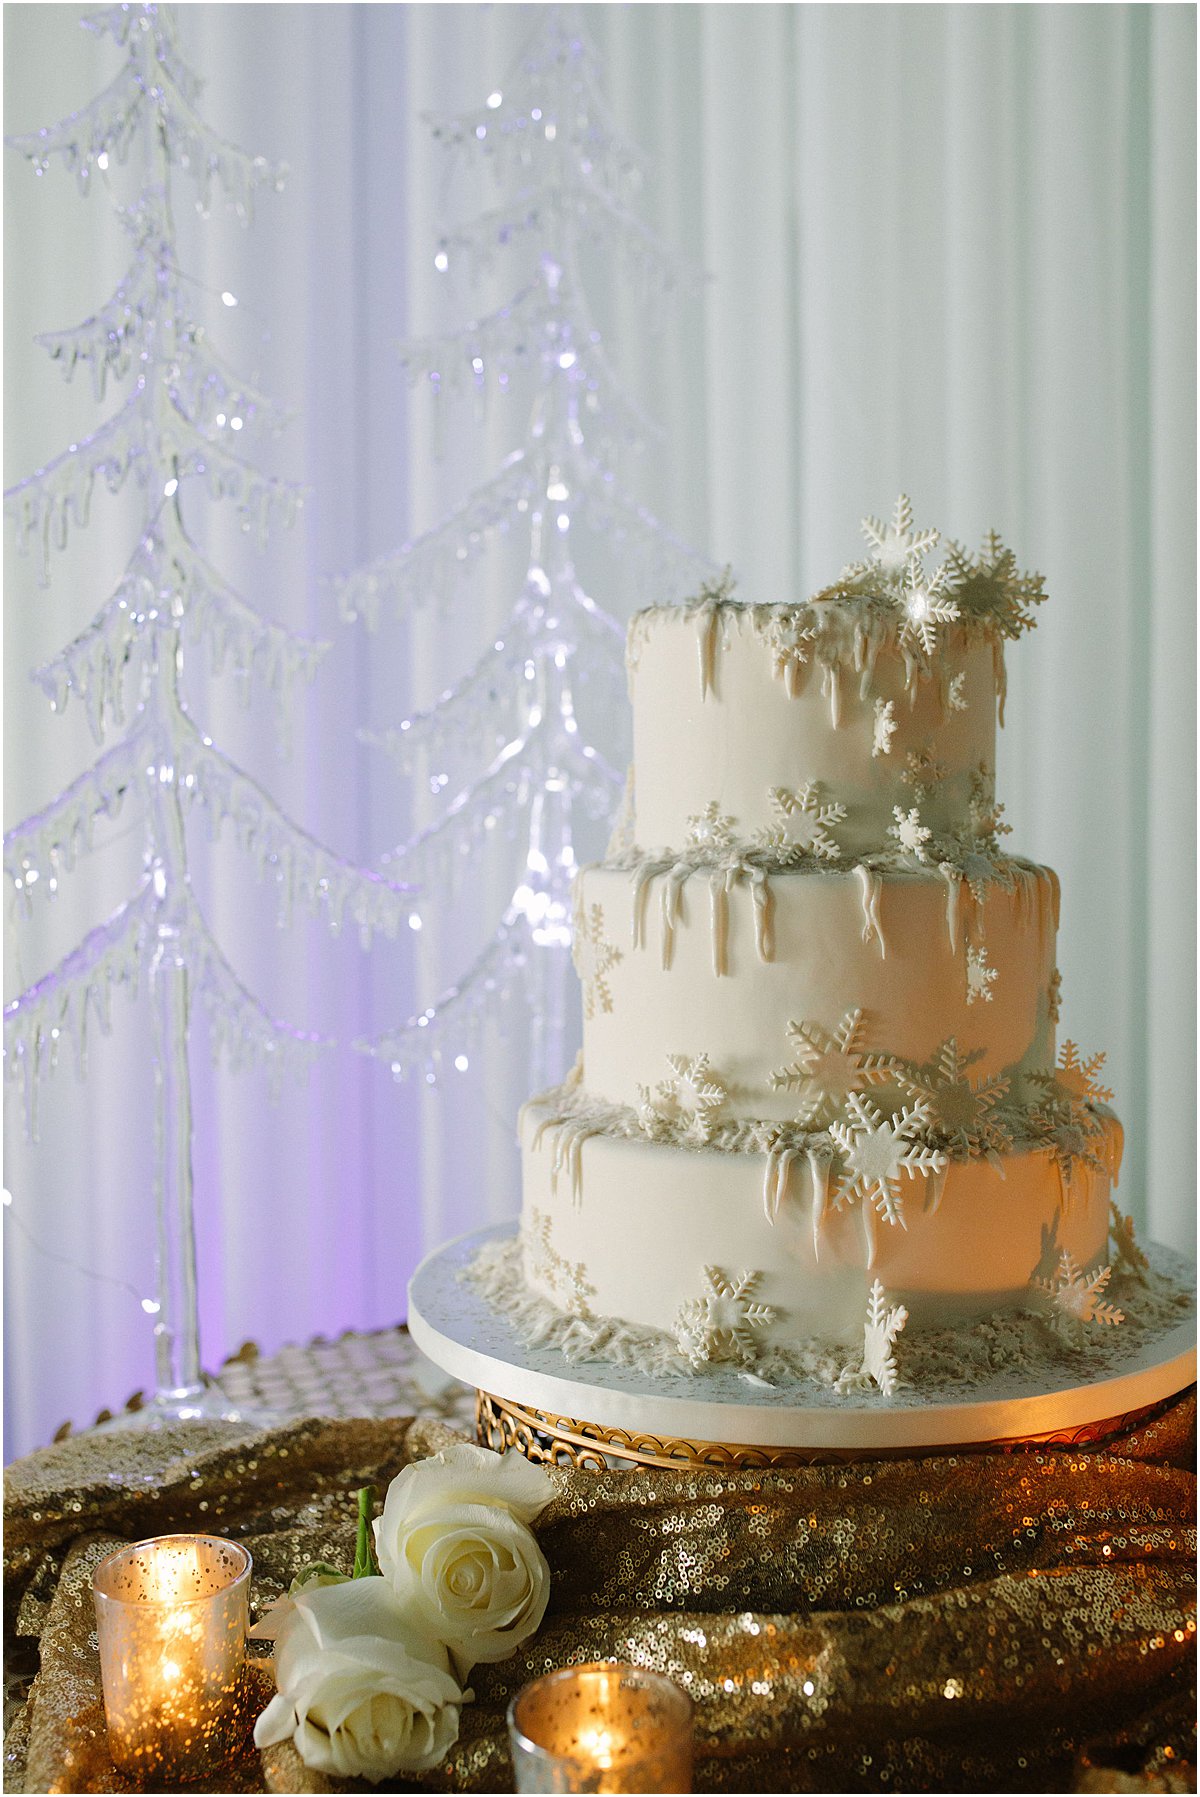 Christmas Wedding Ideas | Snowflake Wedding Cake | Palm Beach, FL | Married in Palm Beach | www.marriedinpalmbeach.com | Captured Beauty Photography